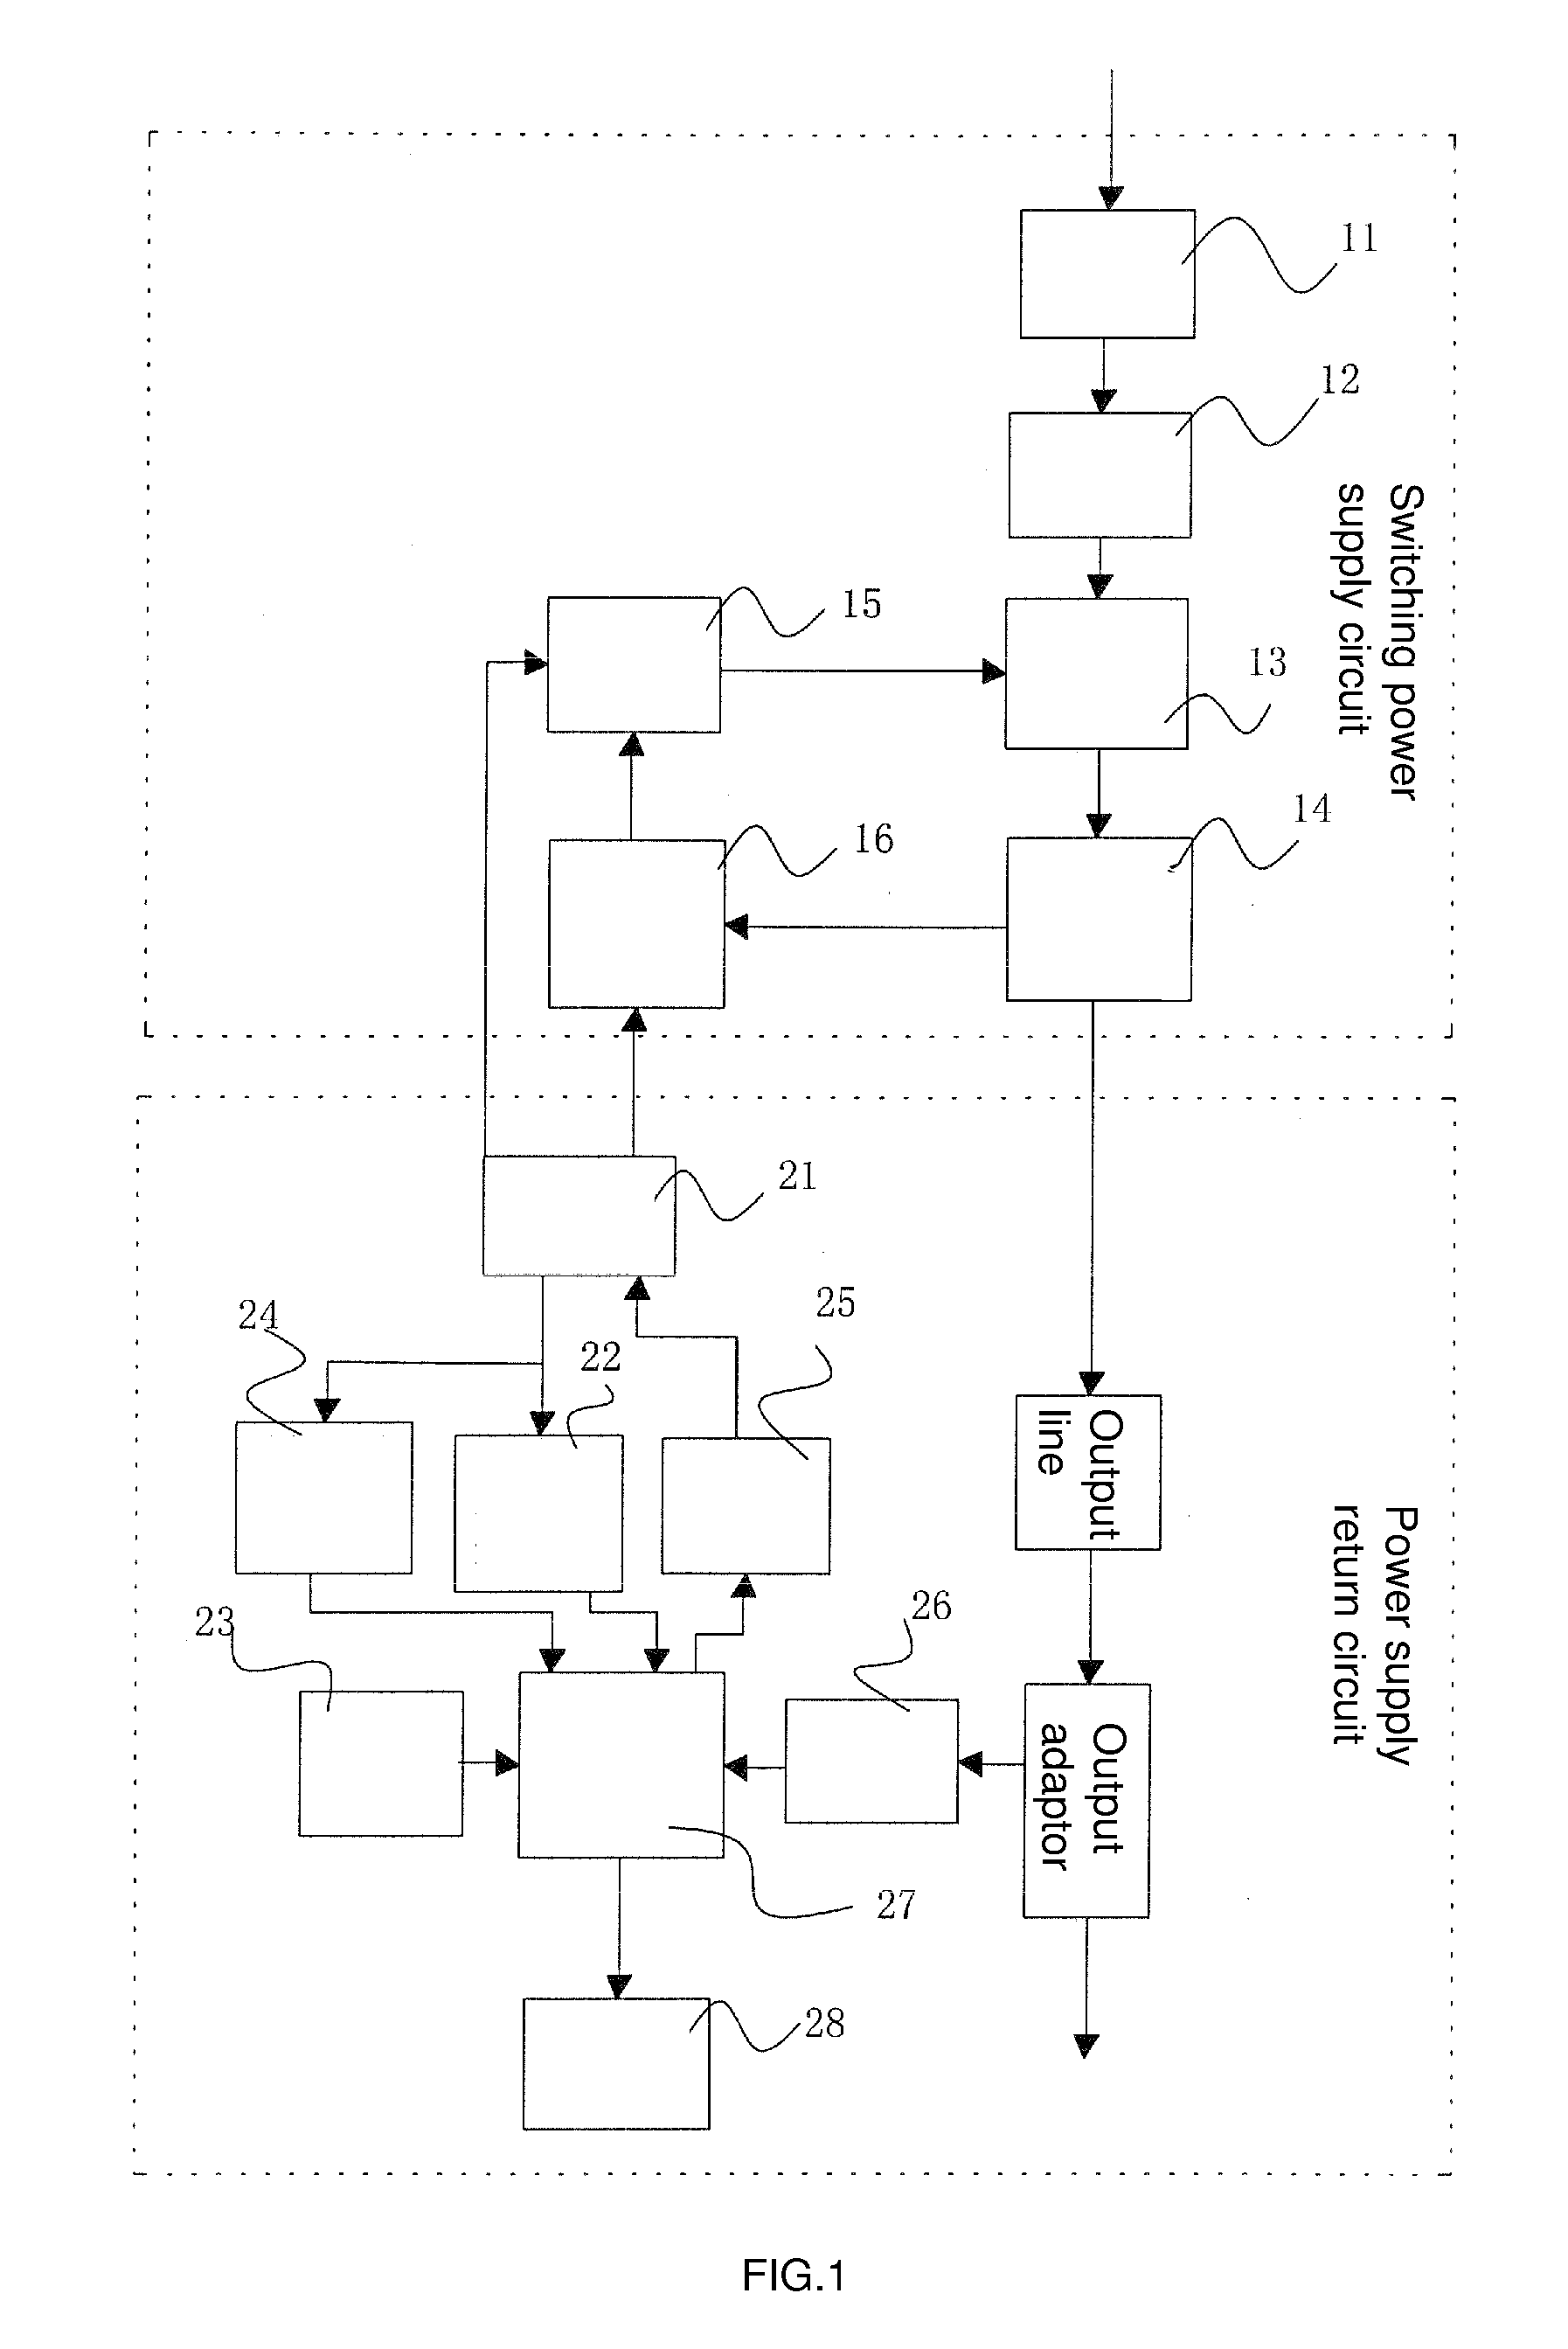 Electrical power adaptor with self-adjusting output voltage regulation